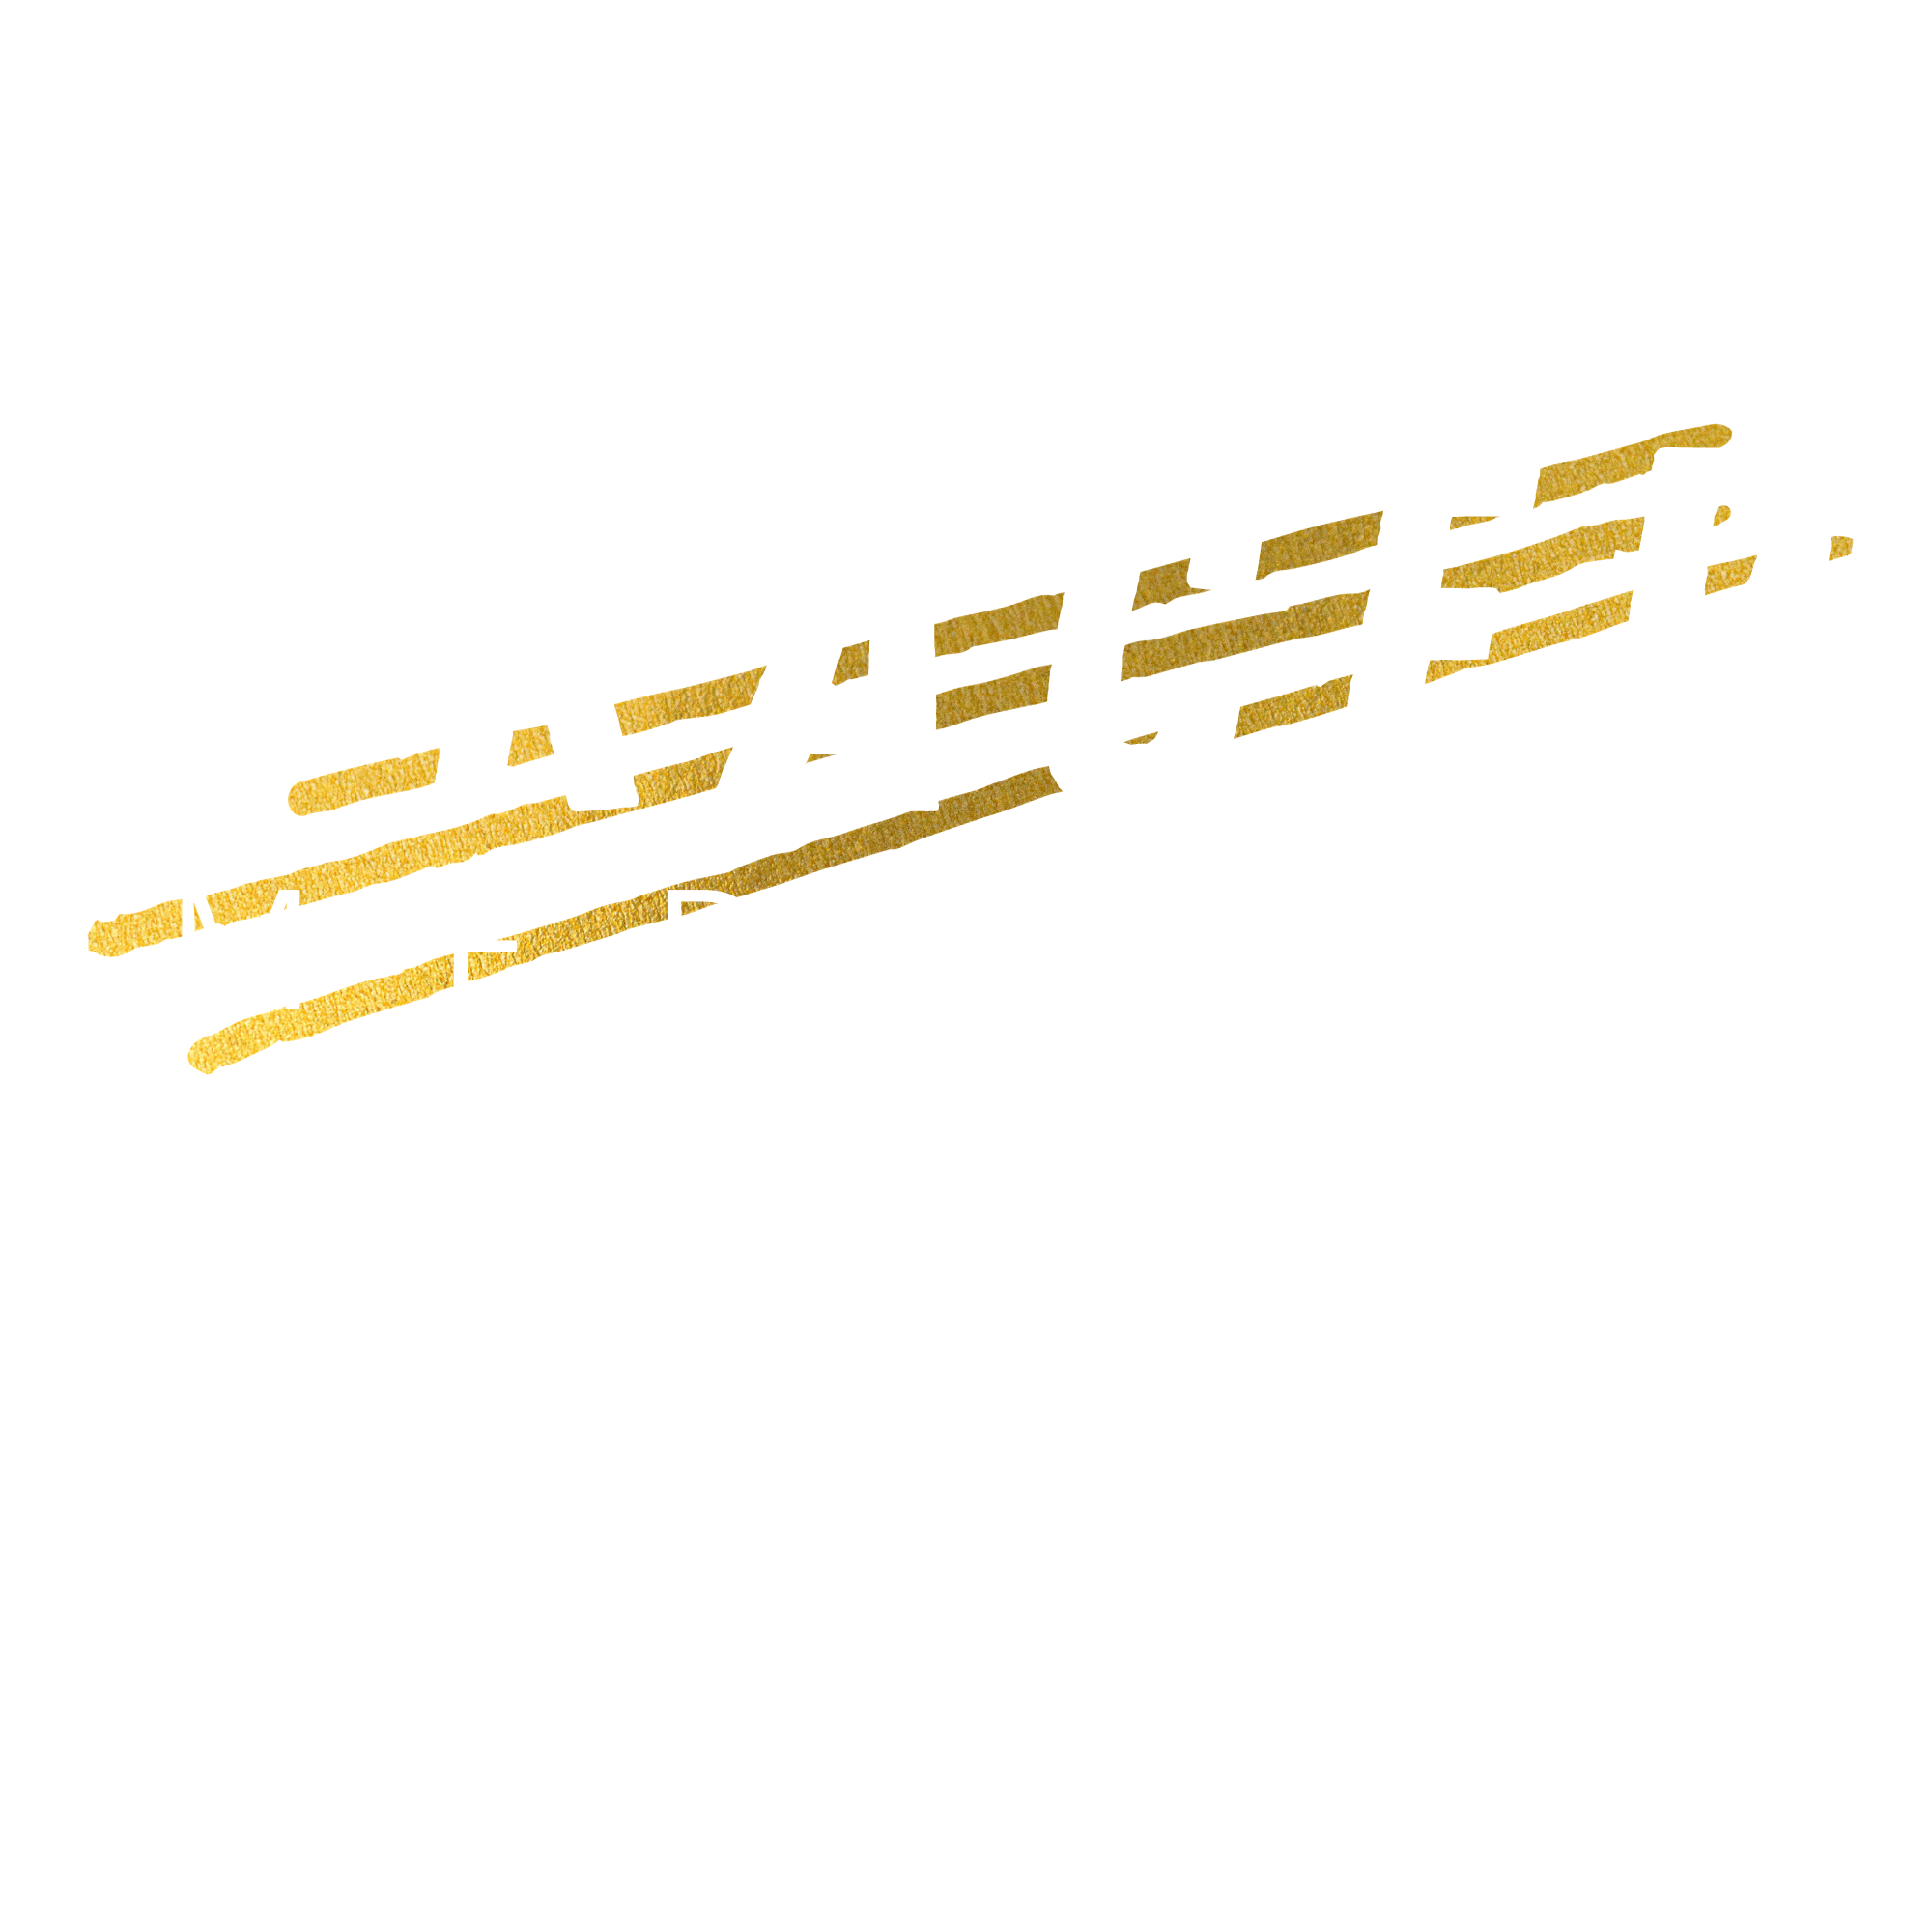 Tracer Media Co